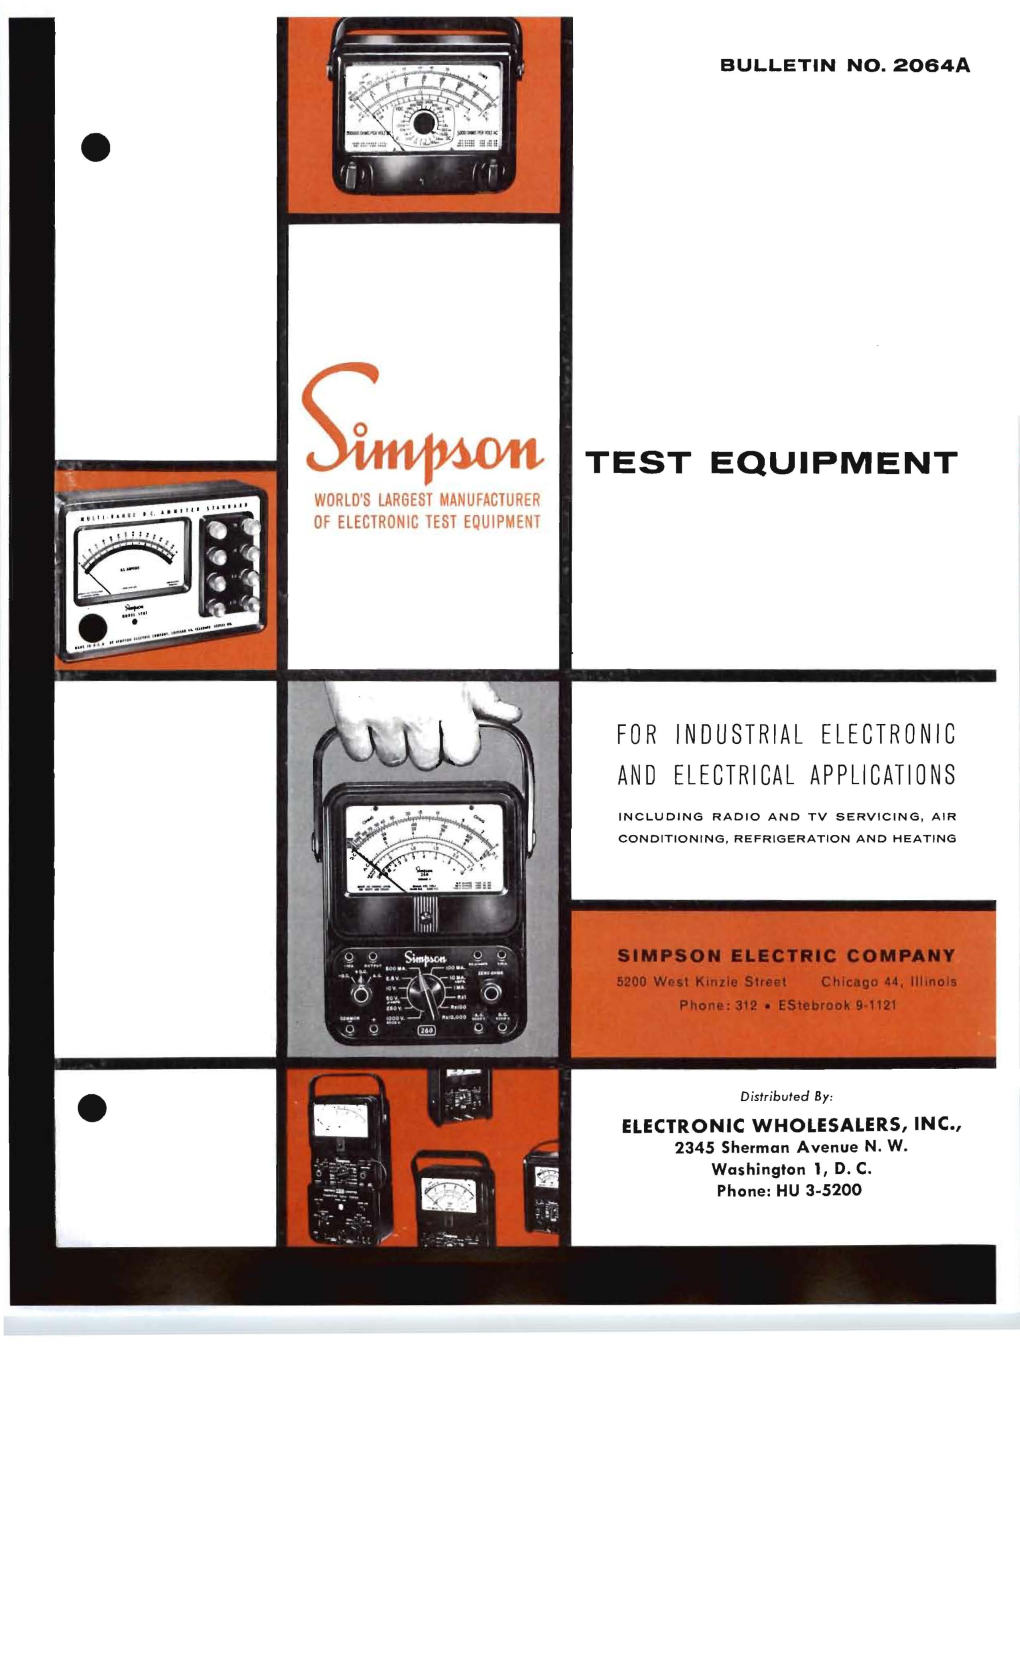 Simpson Test Equipment (Bulletin No. 2064A)